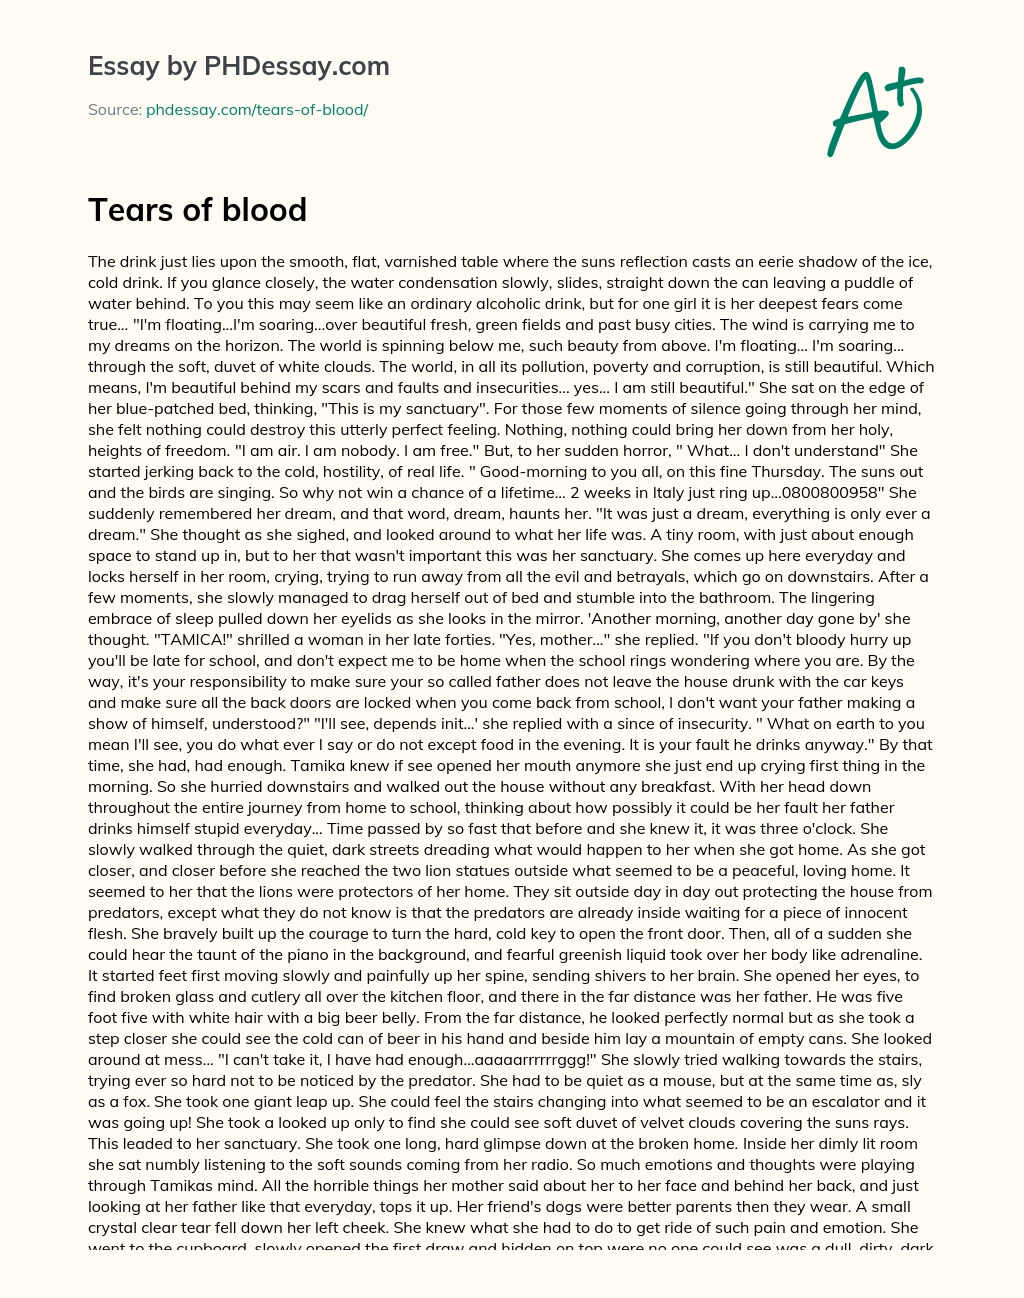 Tears of blood essay